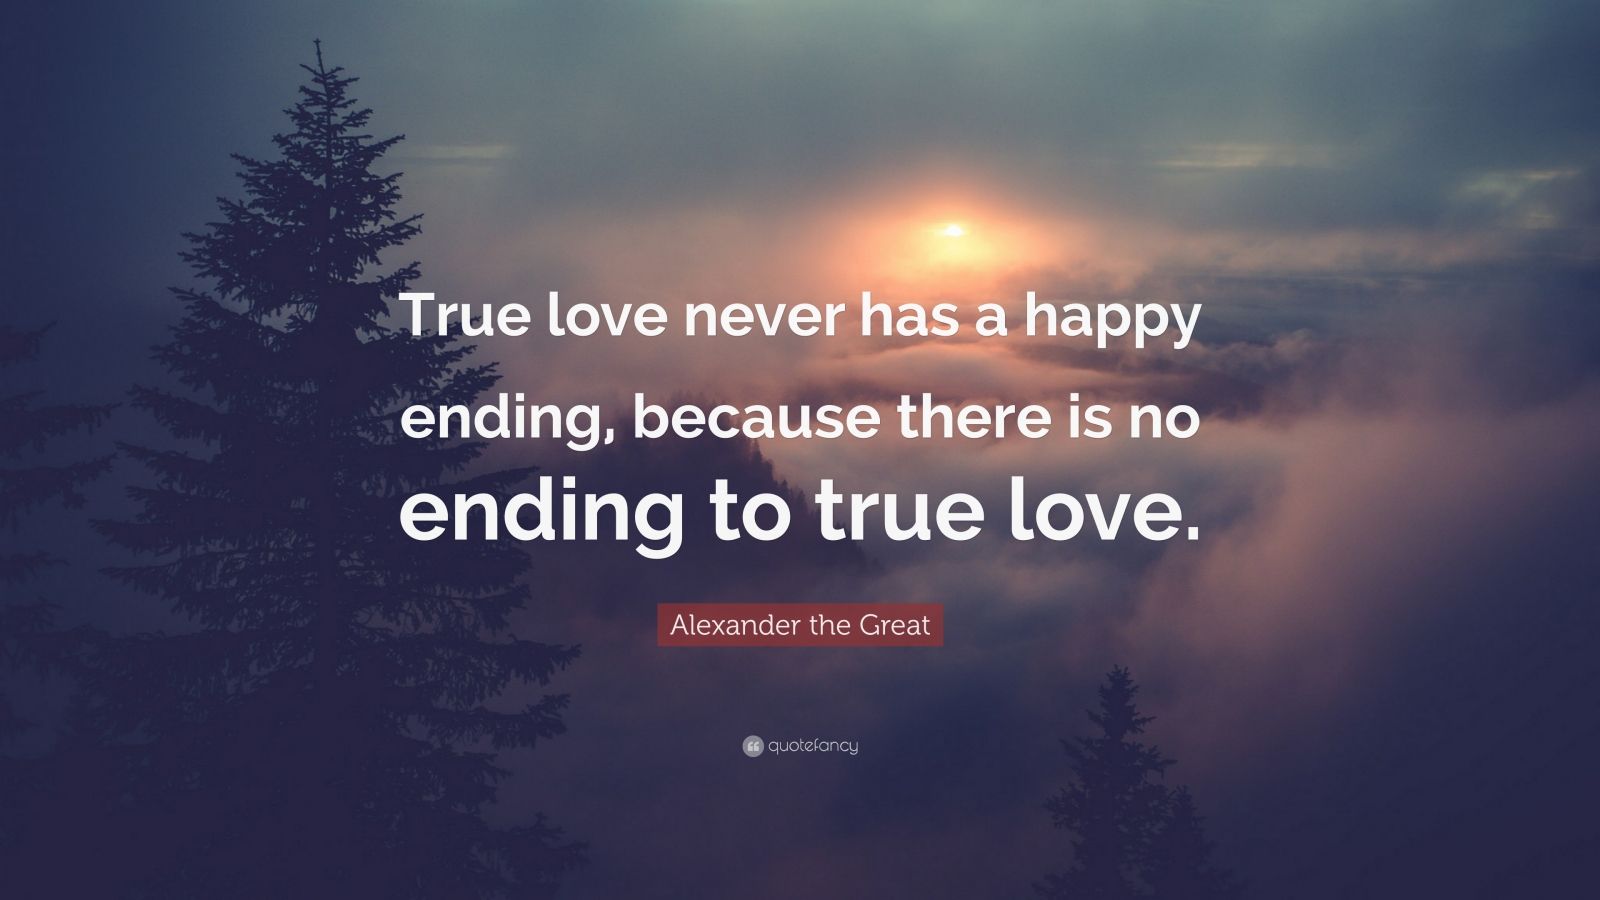 download one true loves ending